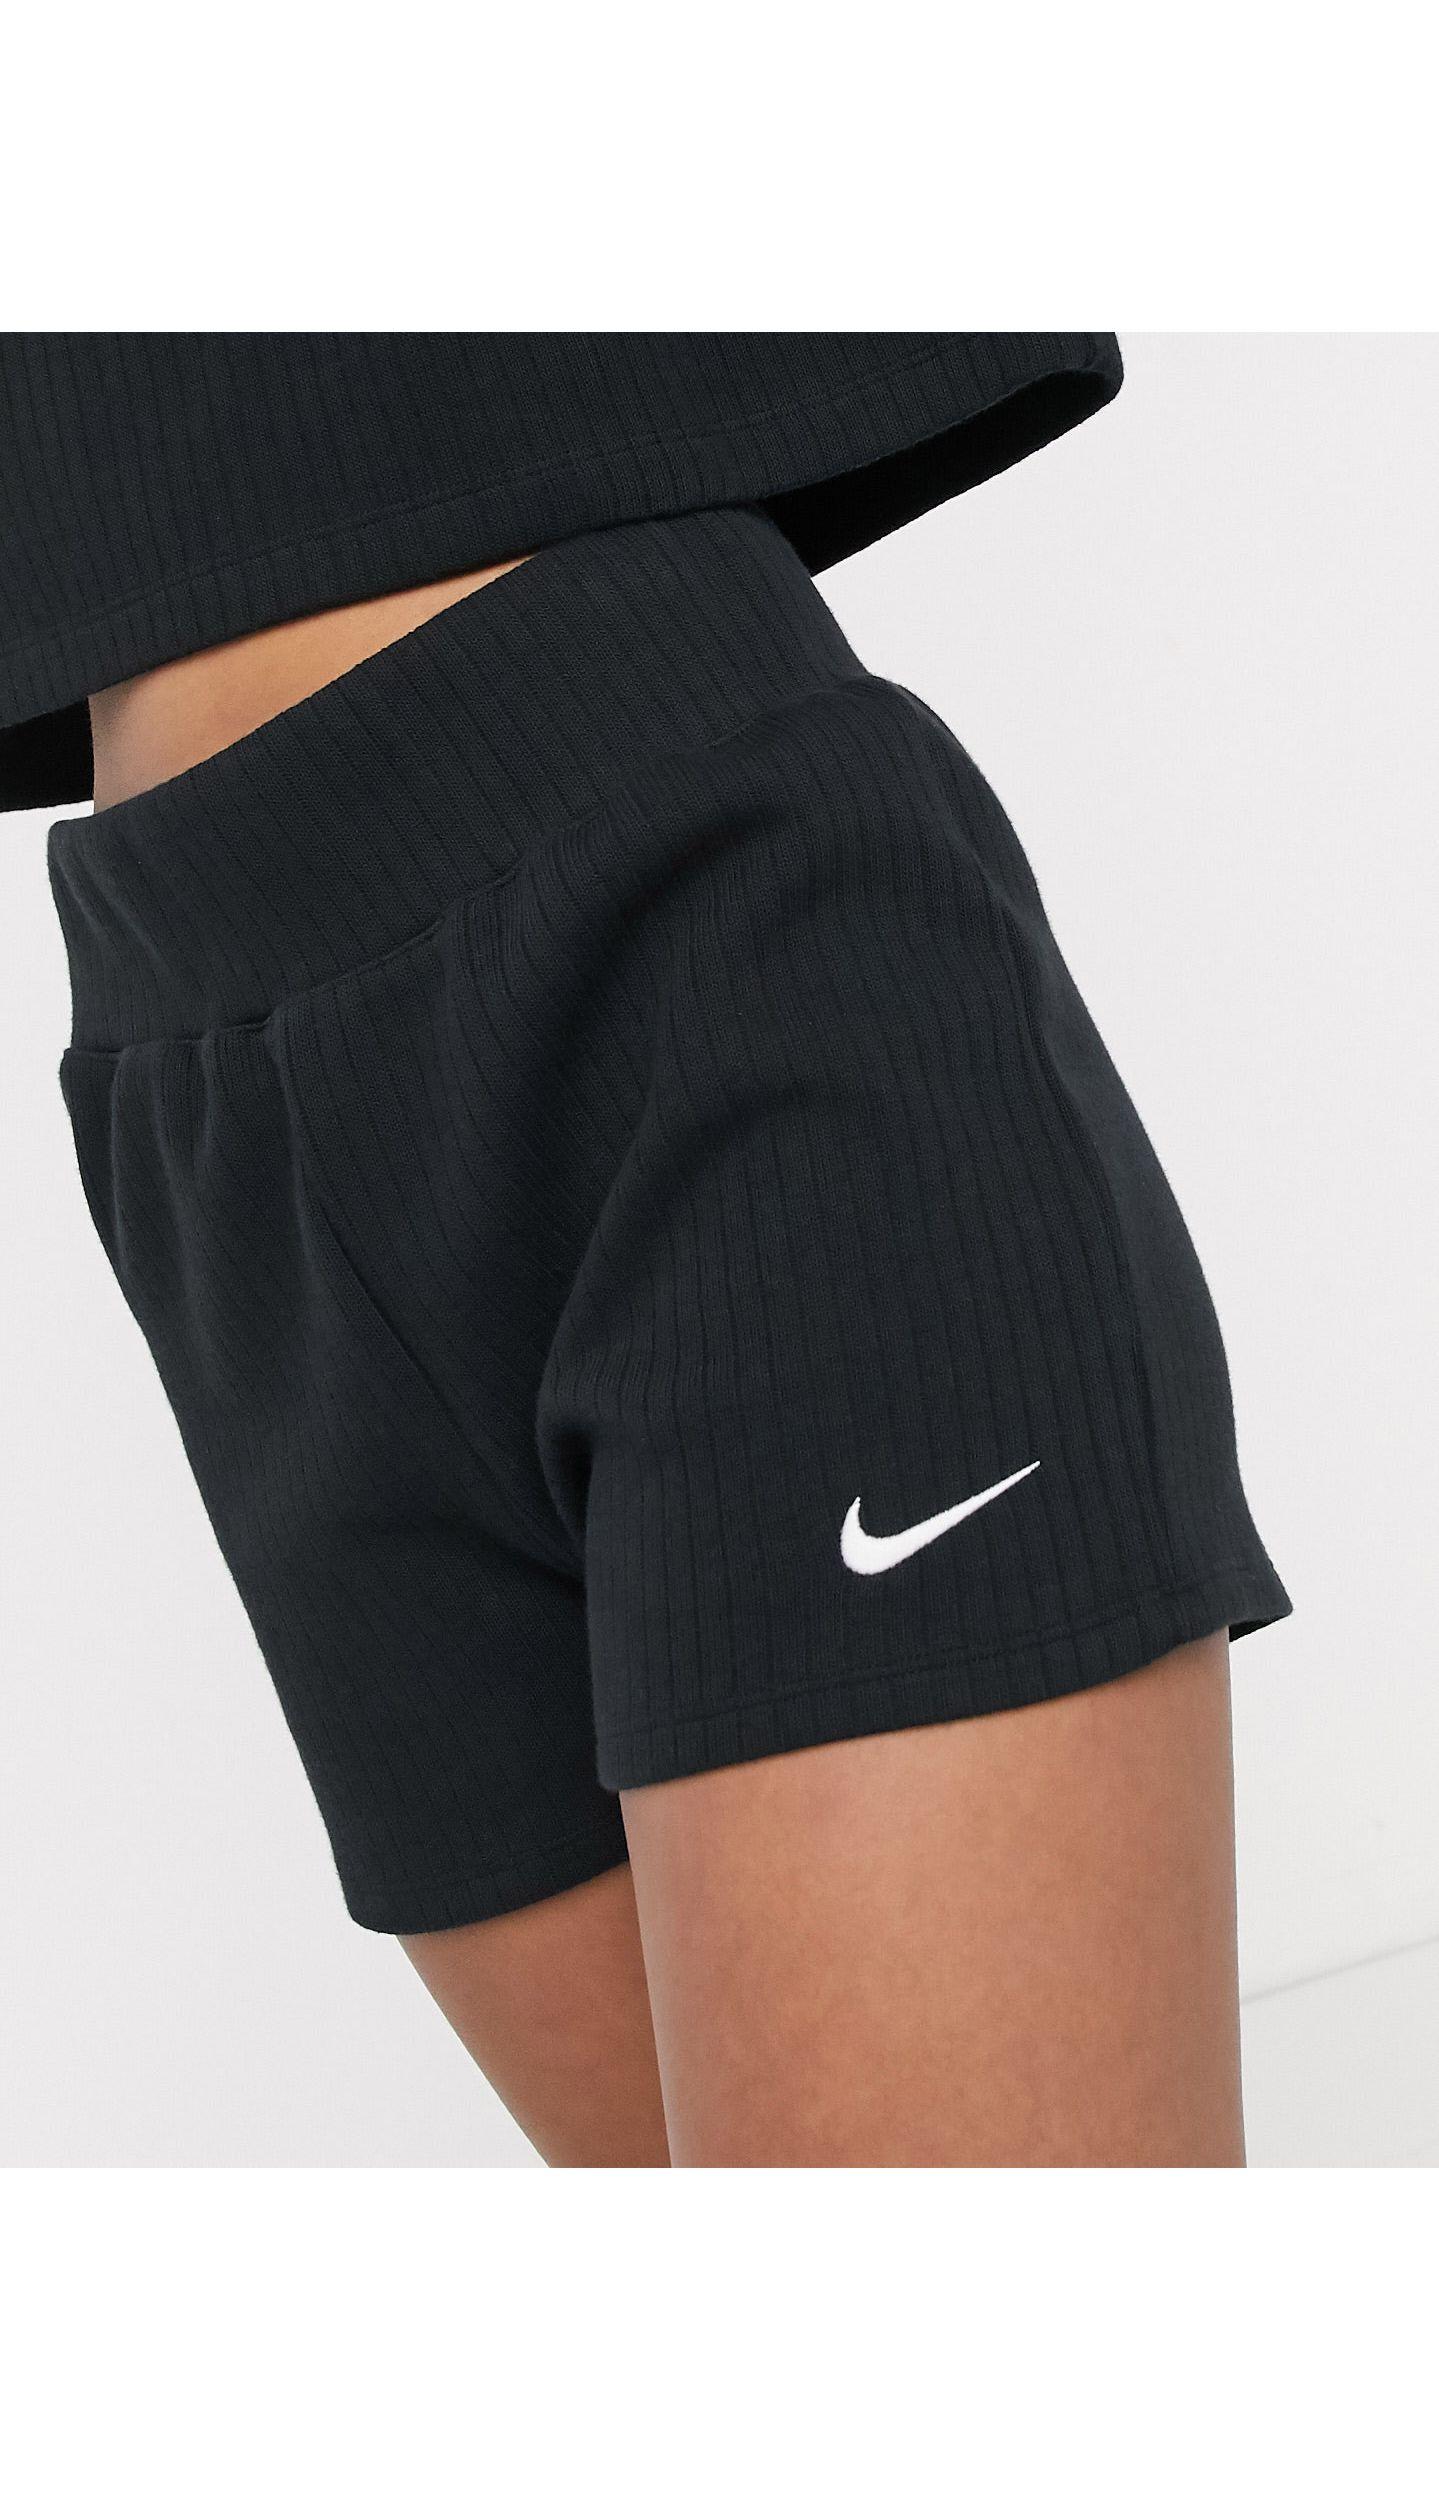 Nike Cotton Premium Ribbed Black Booty 